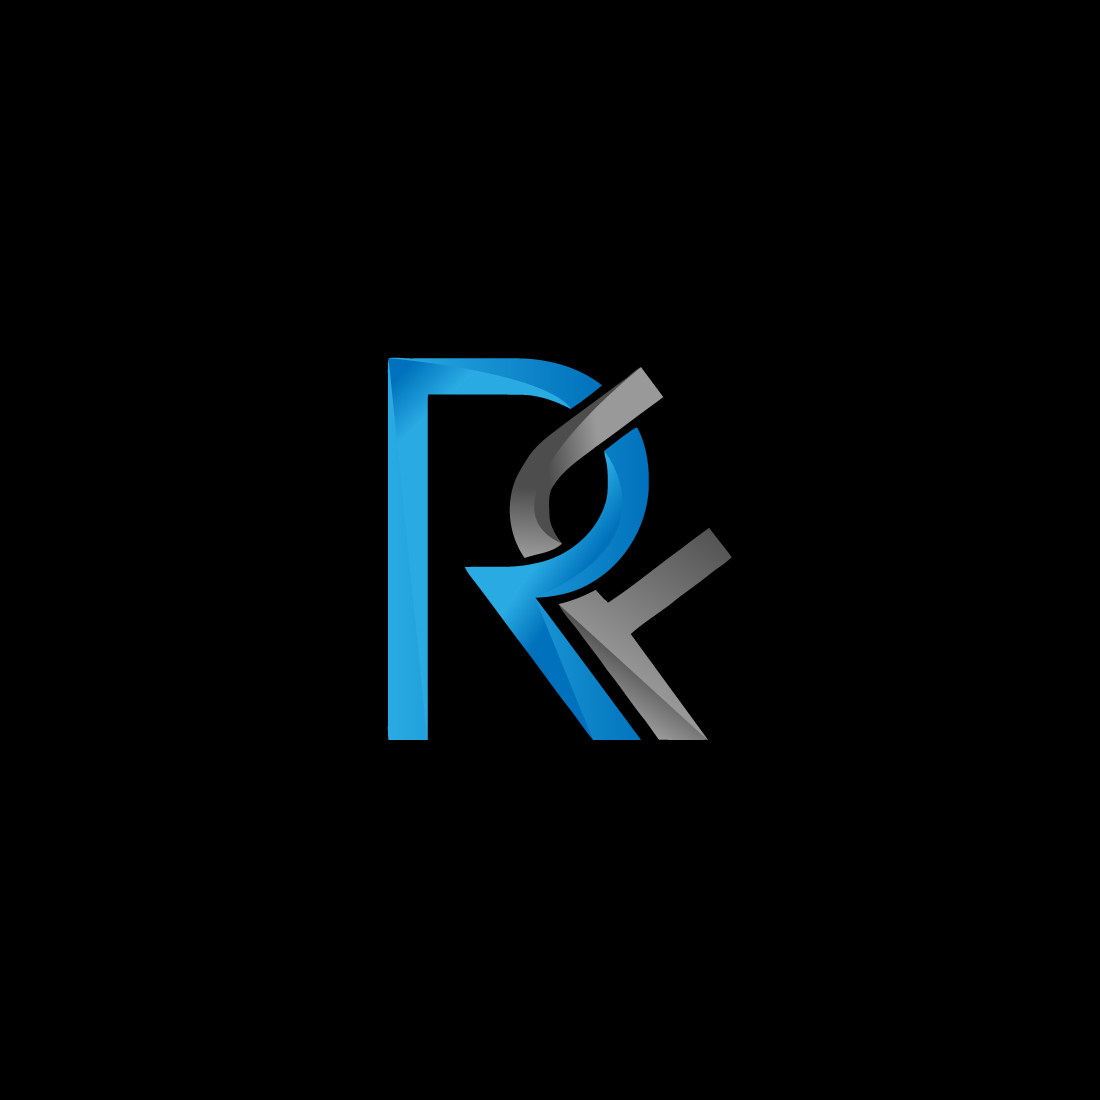 RF logo, RF Letter, RF design, RF icon, RF business preview image.